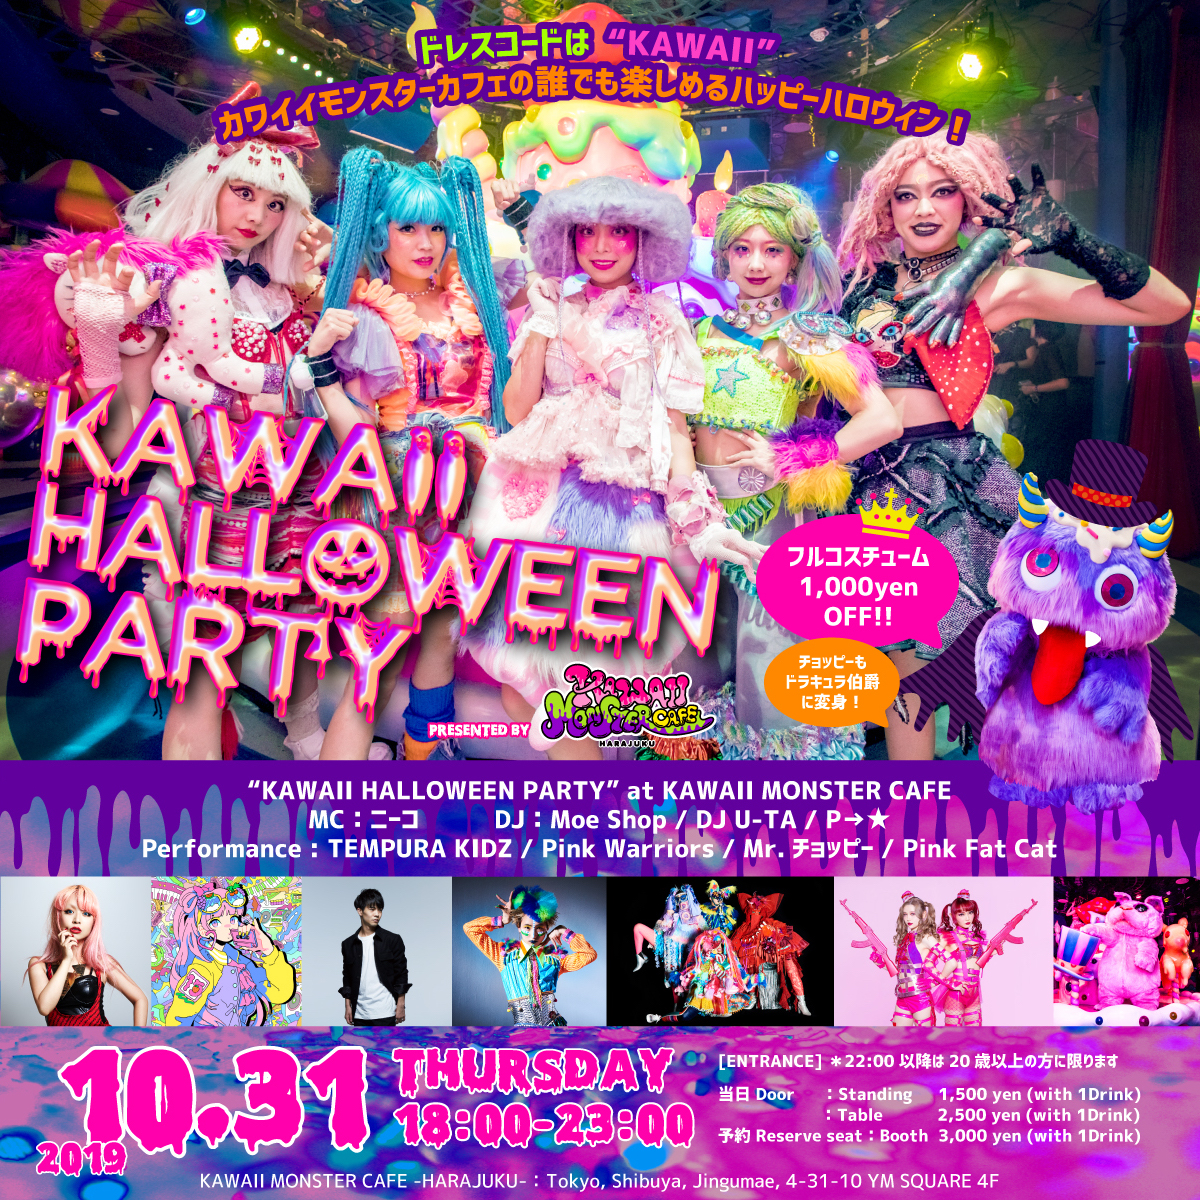 Kawaii Monster Cafeのハロウィンイベント 今年は ブラッディピンク ボーダレス なハロウィン 10 26 土 10 31 木 2day開催 Ddホールディングスのプレスリリース